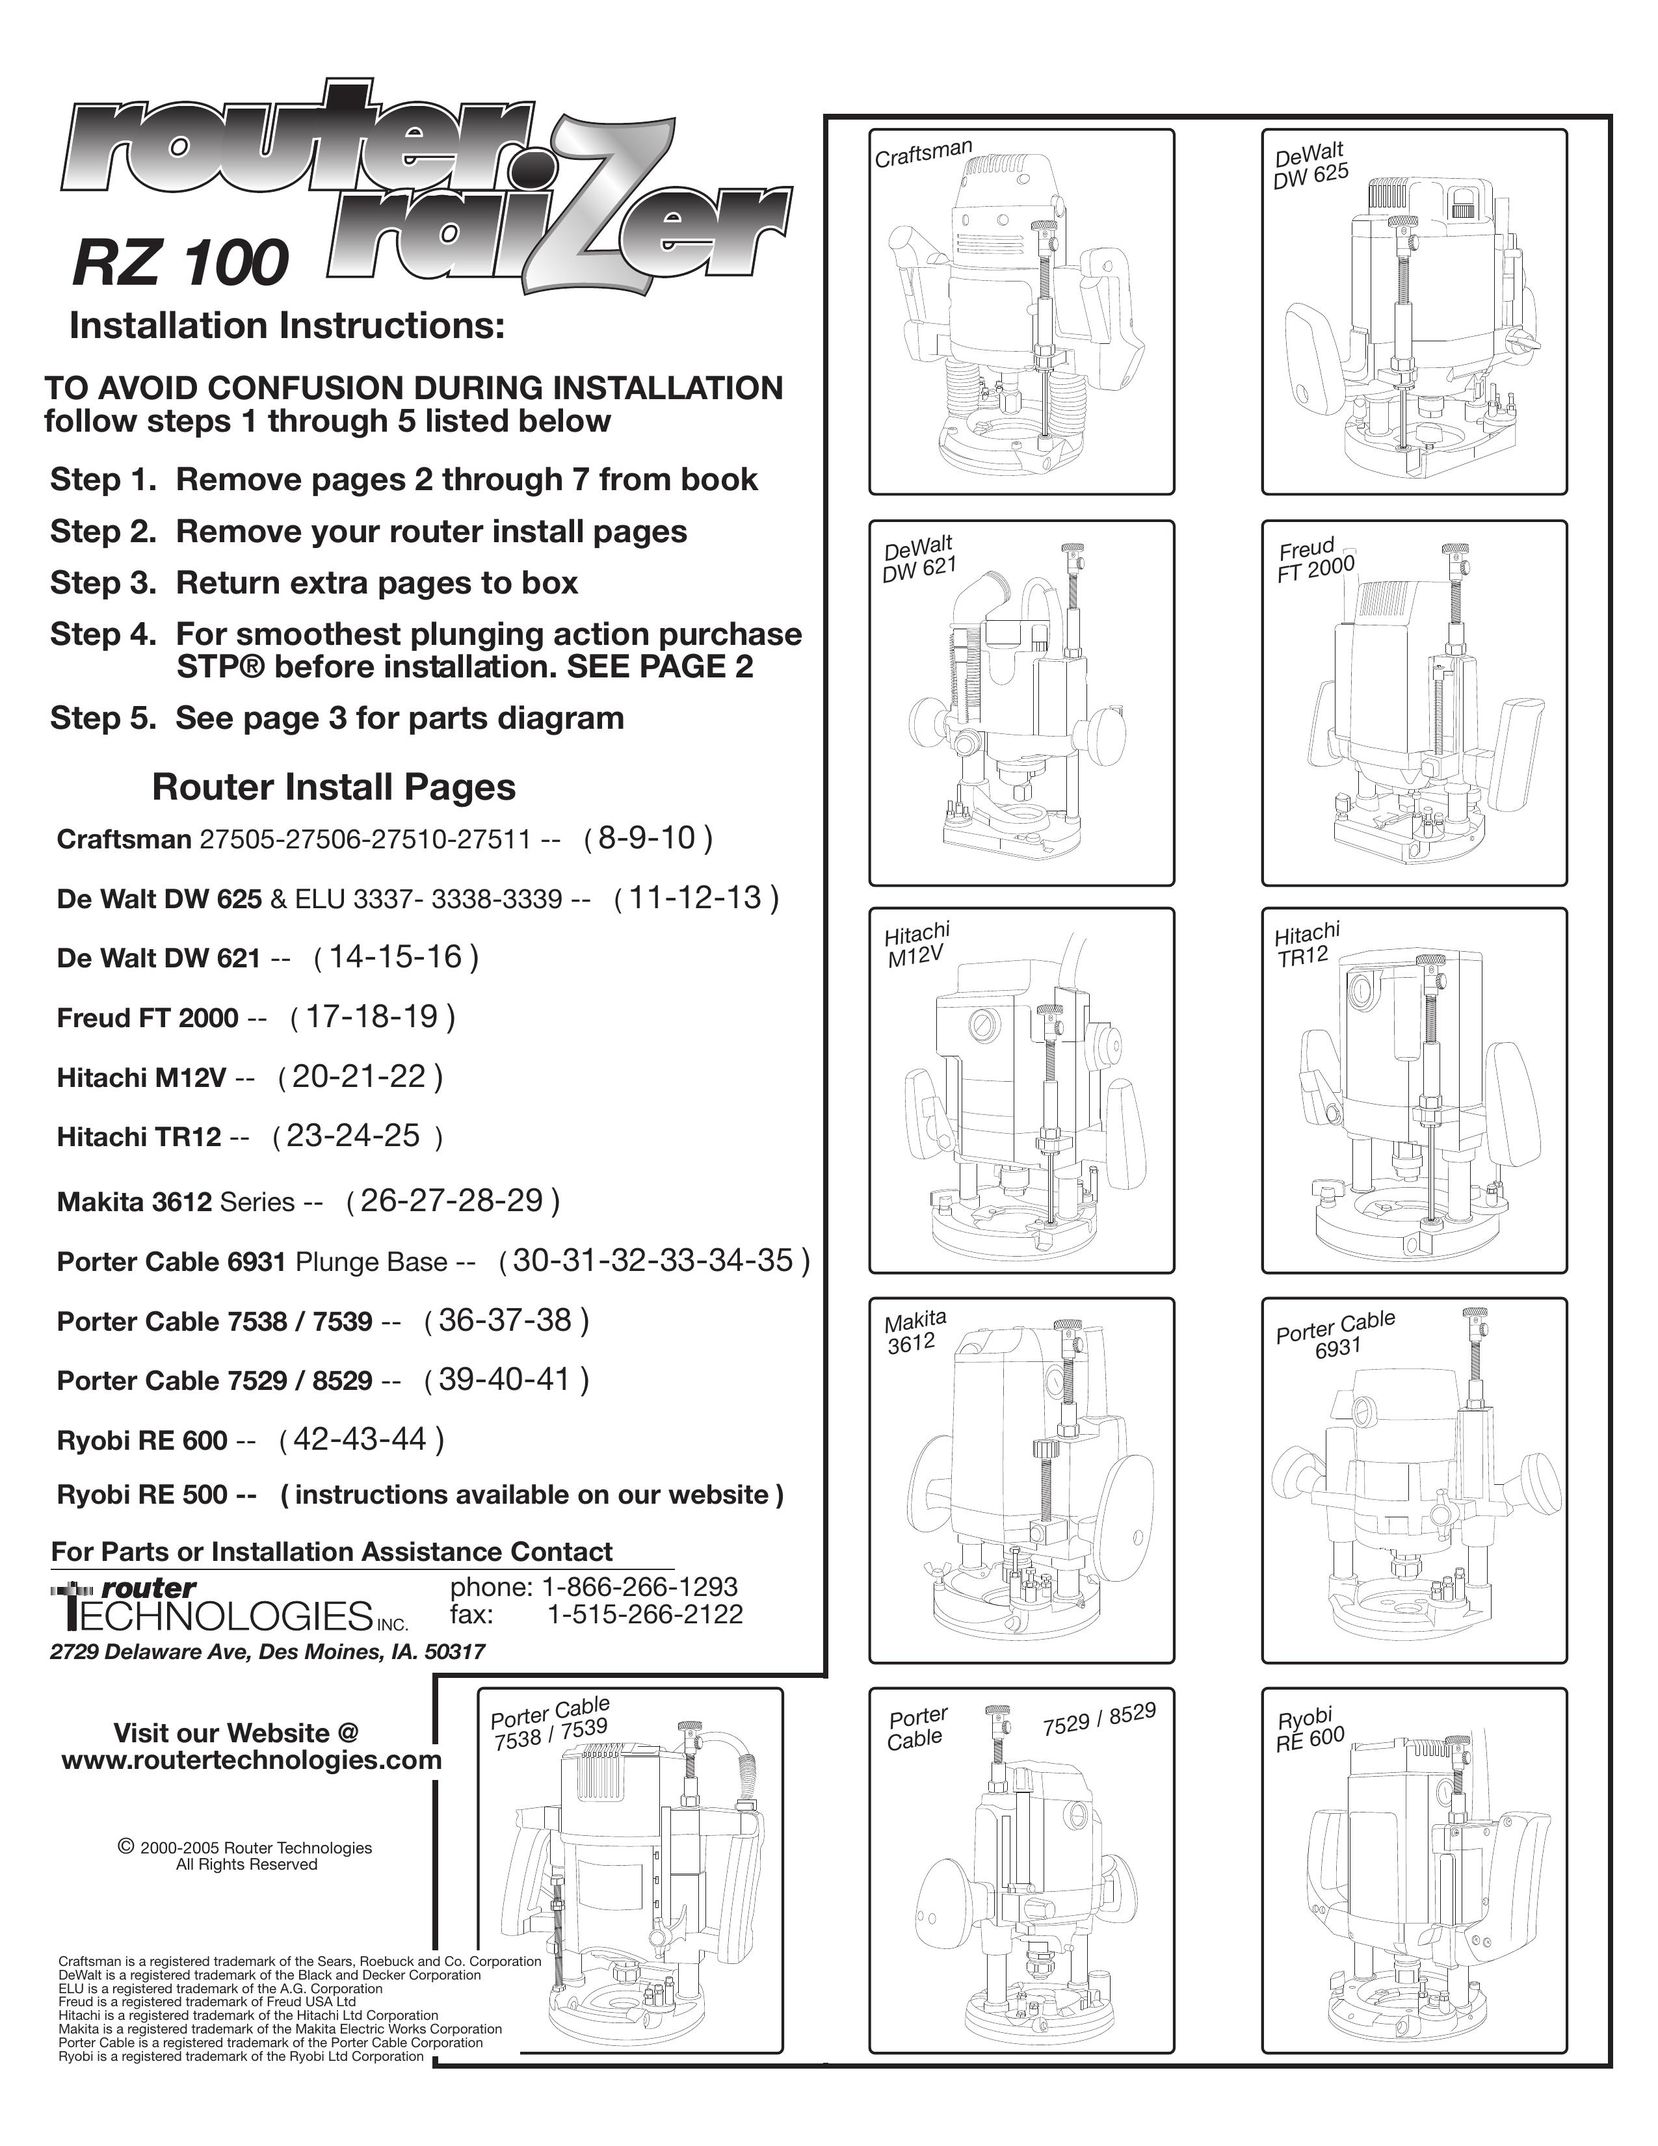 Craftsman RZ100 Router User Manual